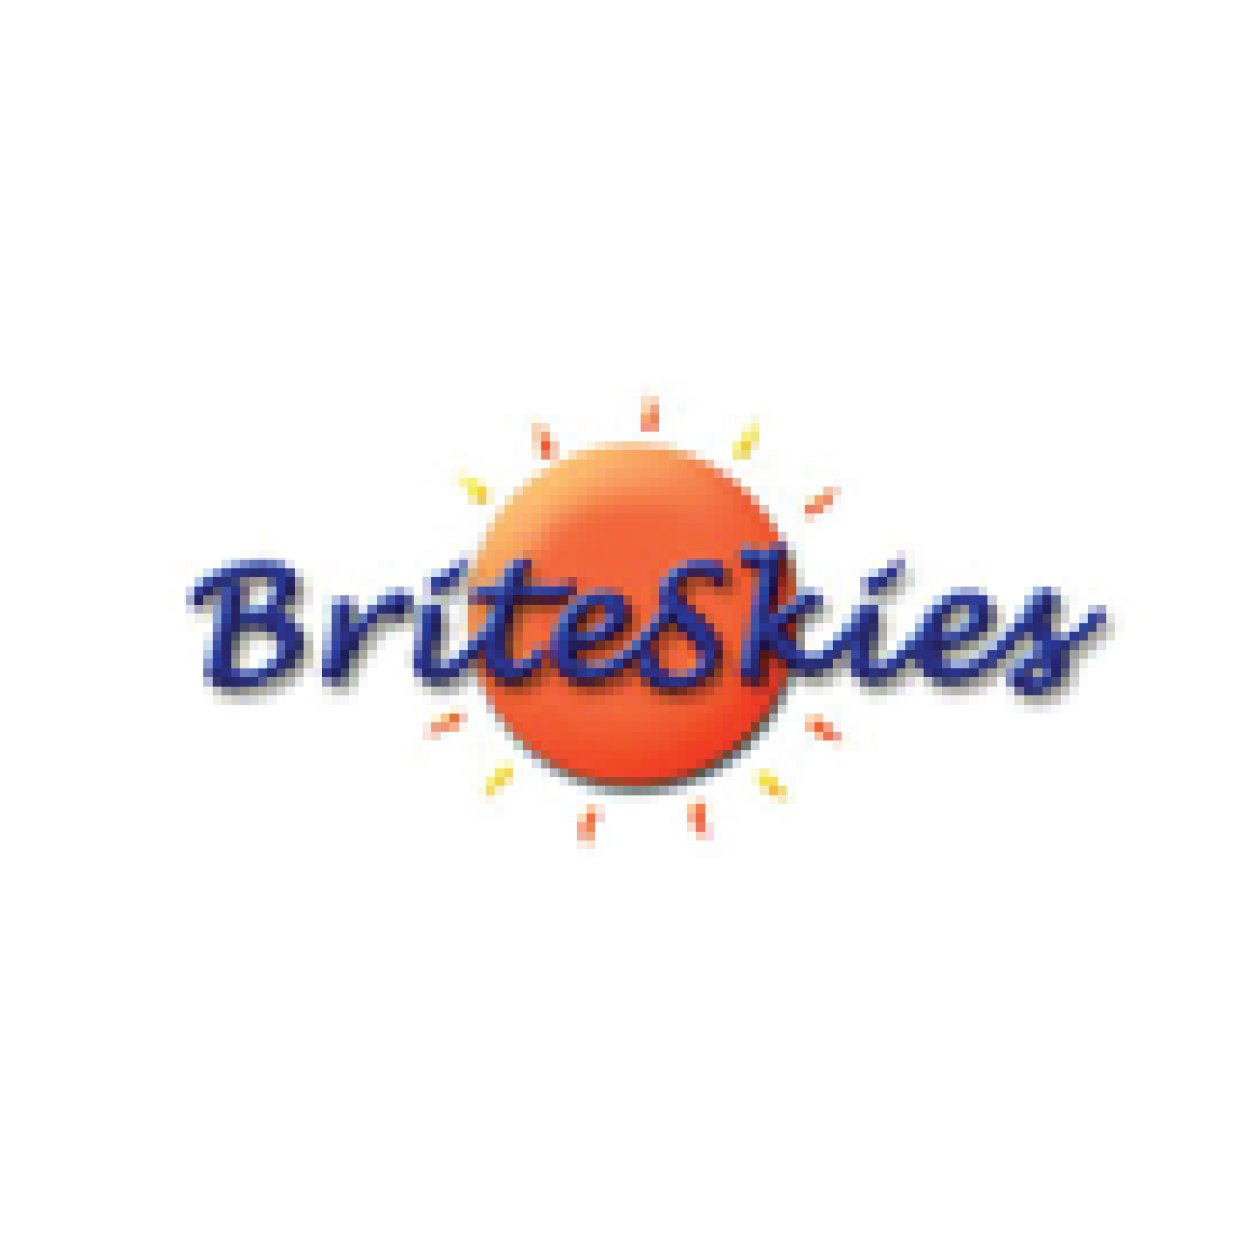 briteskies-logo-evolution-2